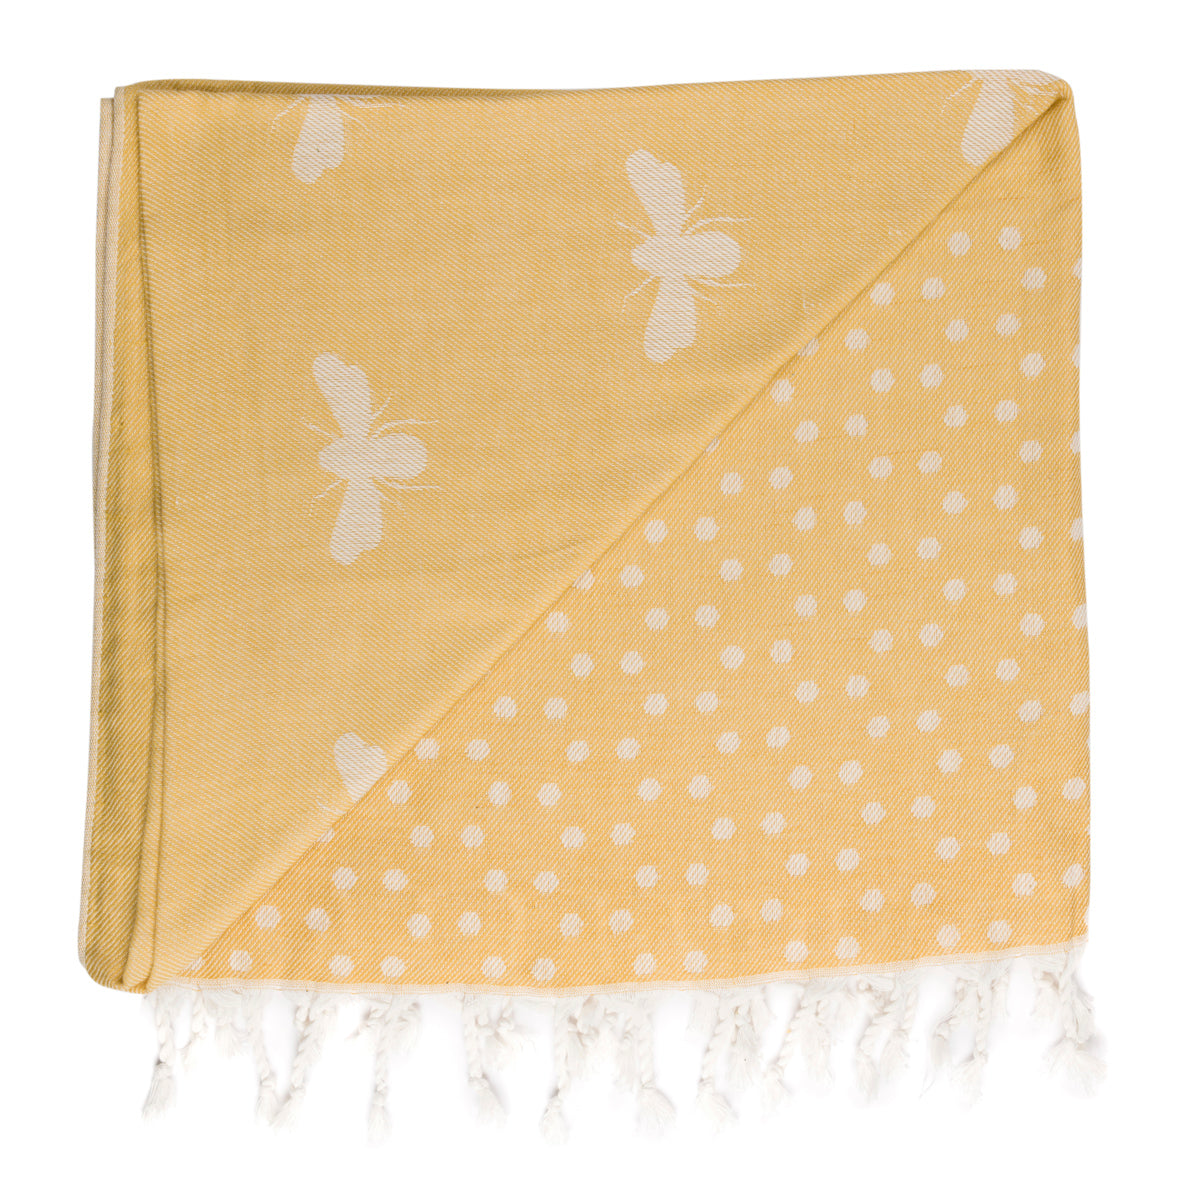 Soft yellow hammam towel in Sophie Allports Bee design.